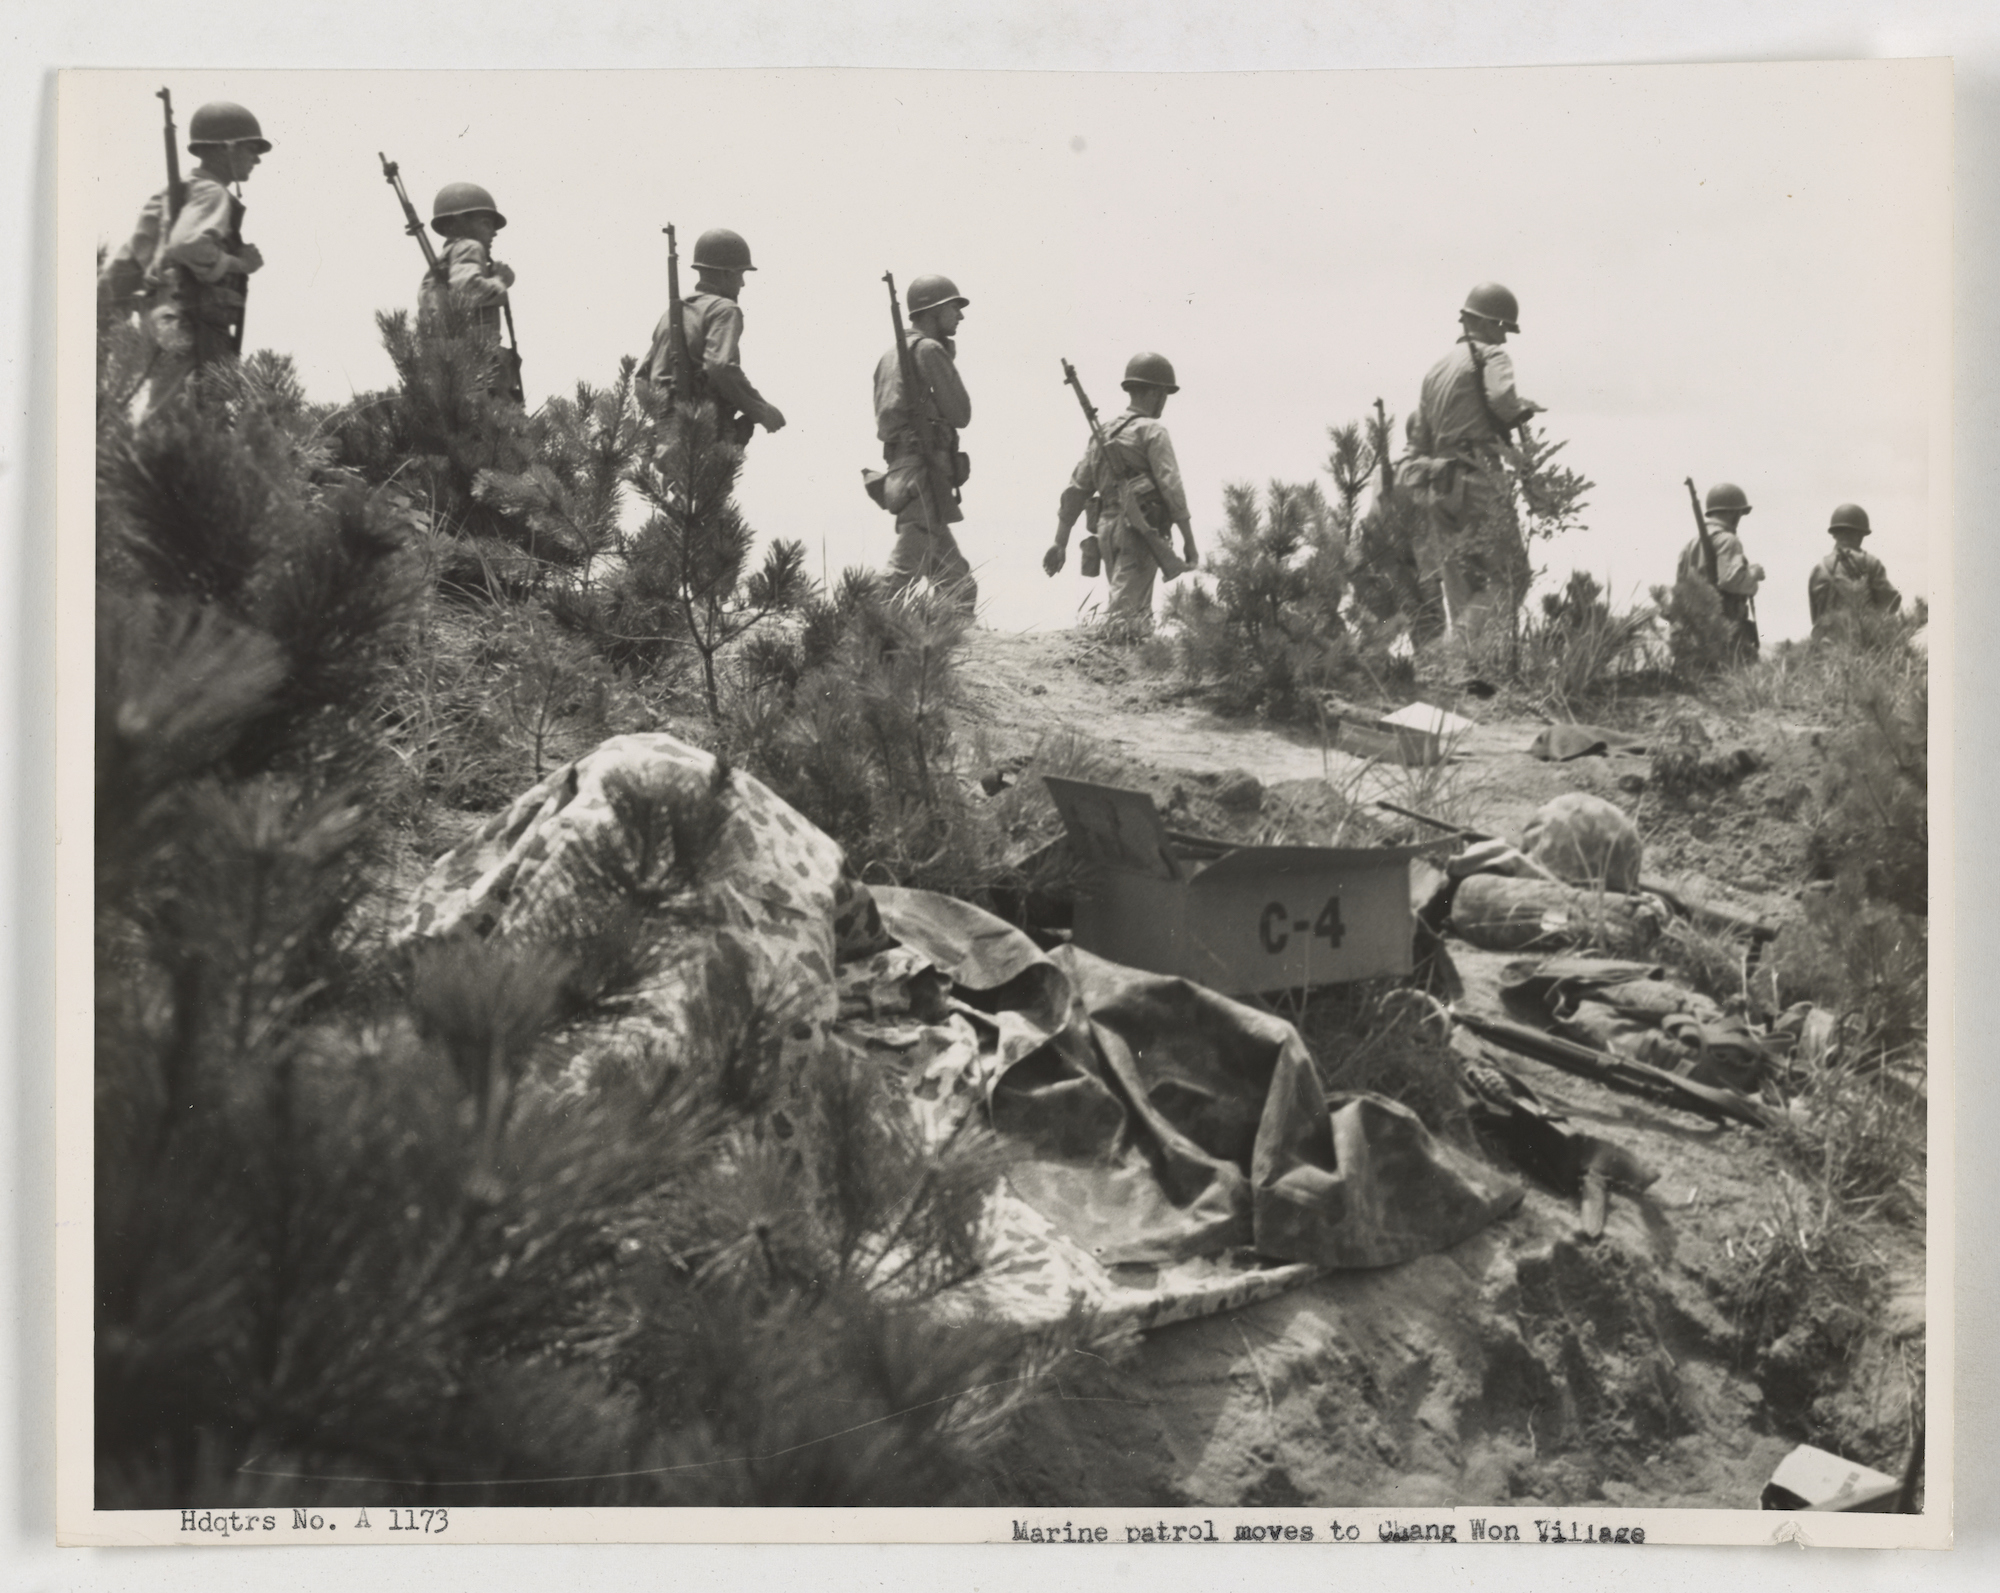 Korean War: Marine patrol near Chang Don village.